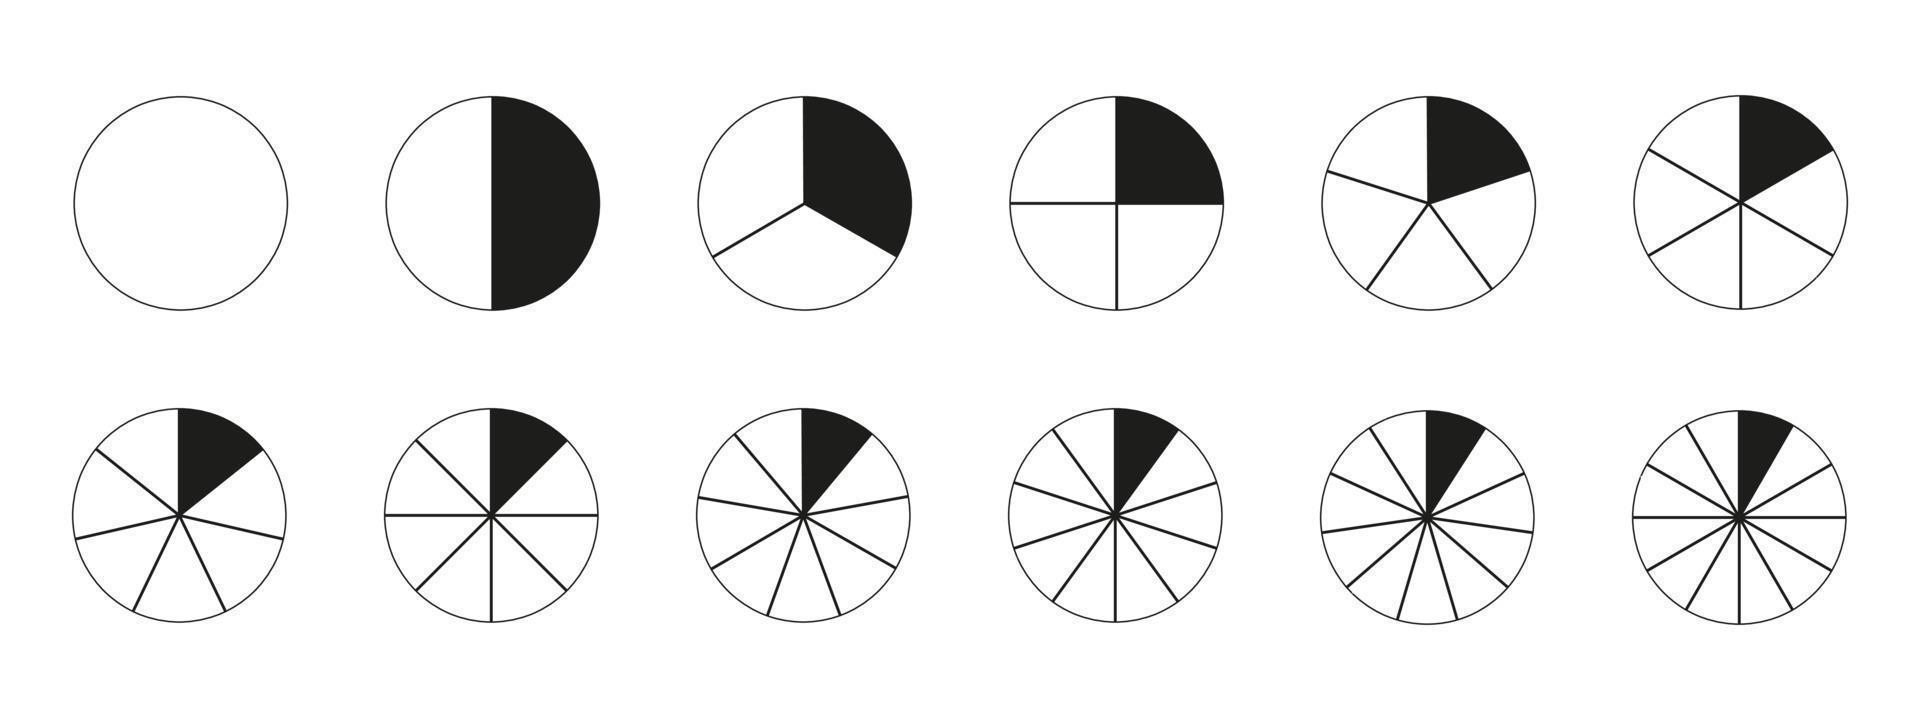 segmento rebanada icono. tarta gráfico modelo. circulo sección grafico línea Arte. 1,2,3,4,5,6,7,8,9,10,11,12 segmentos infografía con uno pintado segmento. diagrama rueda partes. geométrico elemento. vector